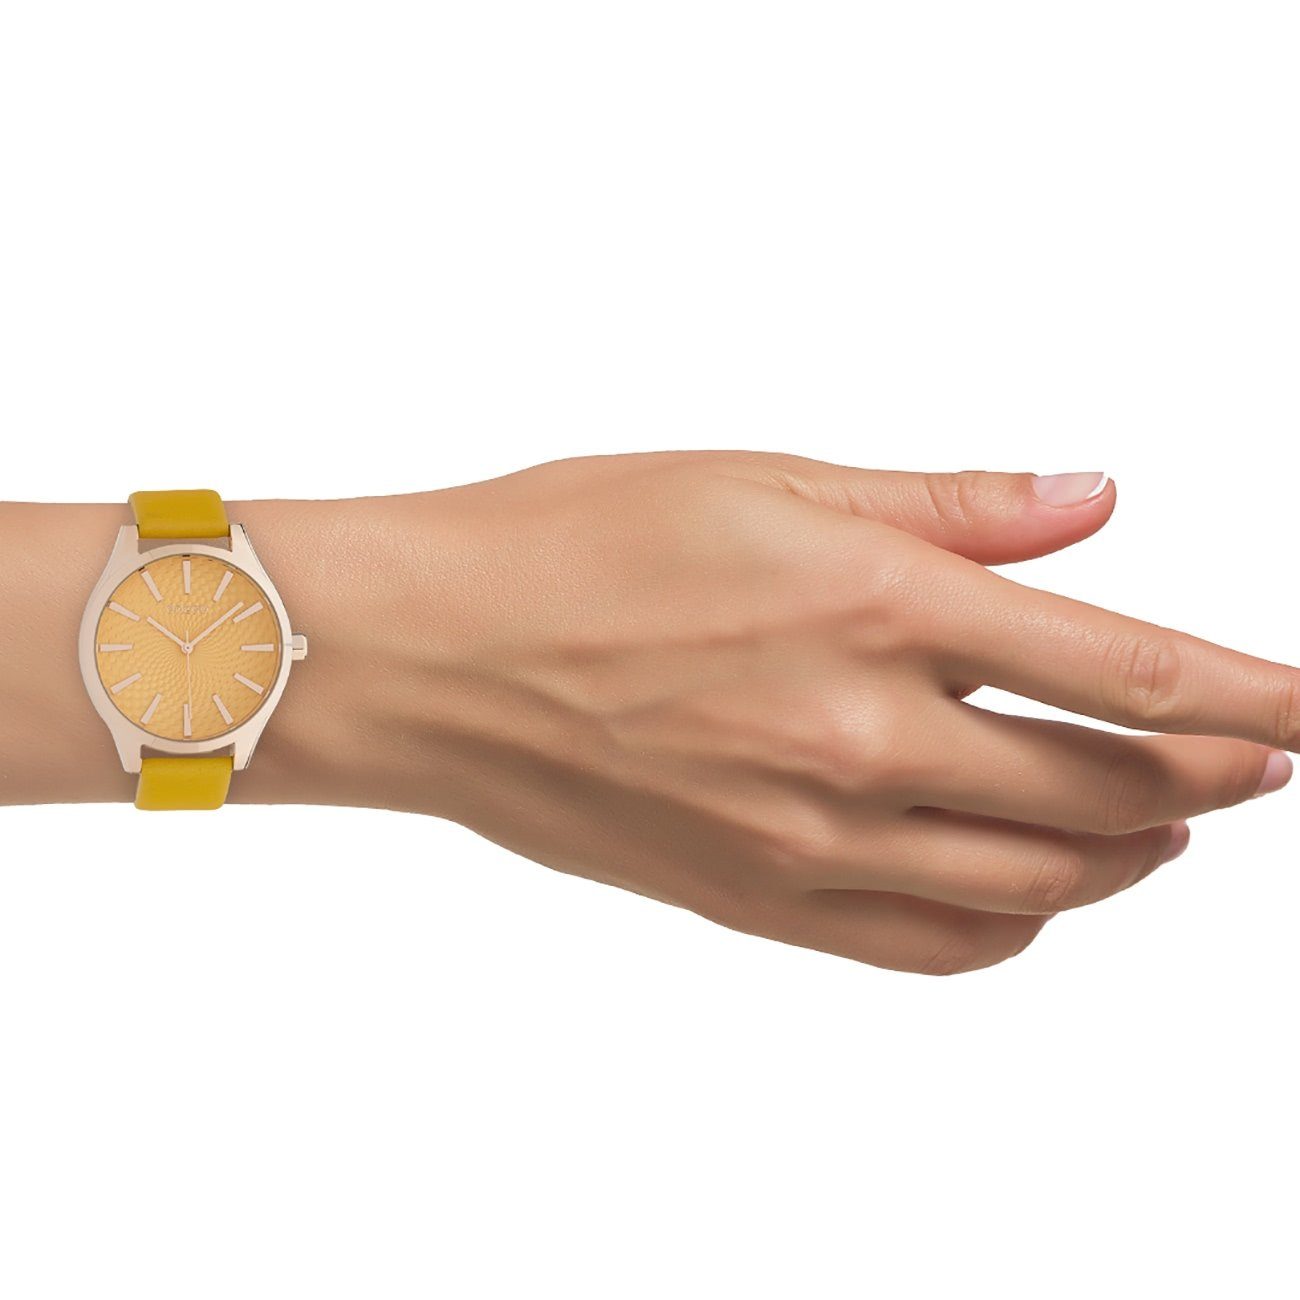 OOZOO Quarzuhr Oozoo Fashion 42mm), Armbanduhr Timepieces, gelb, groß OOZOO Damen (ca. rund, Lederarmband Damenuhr